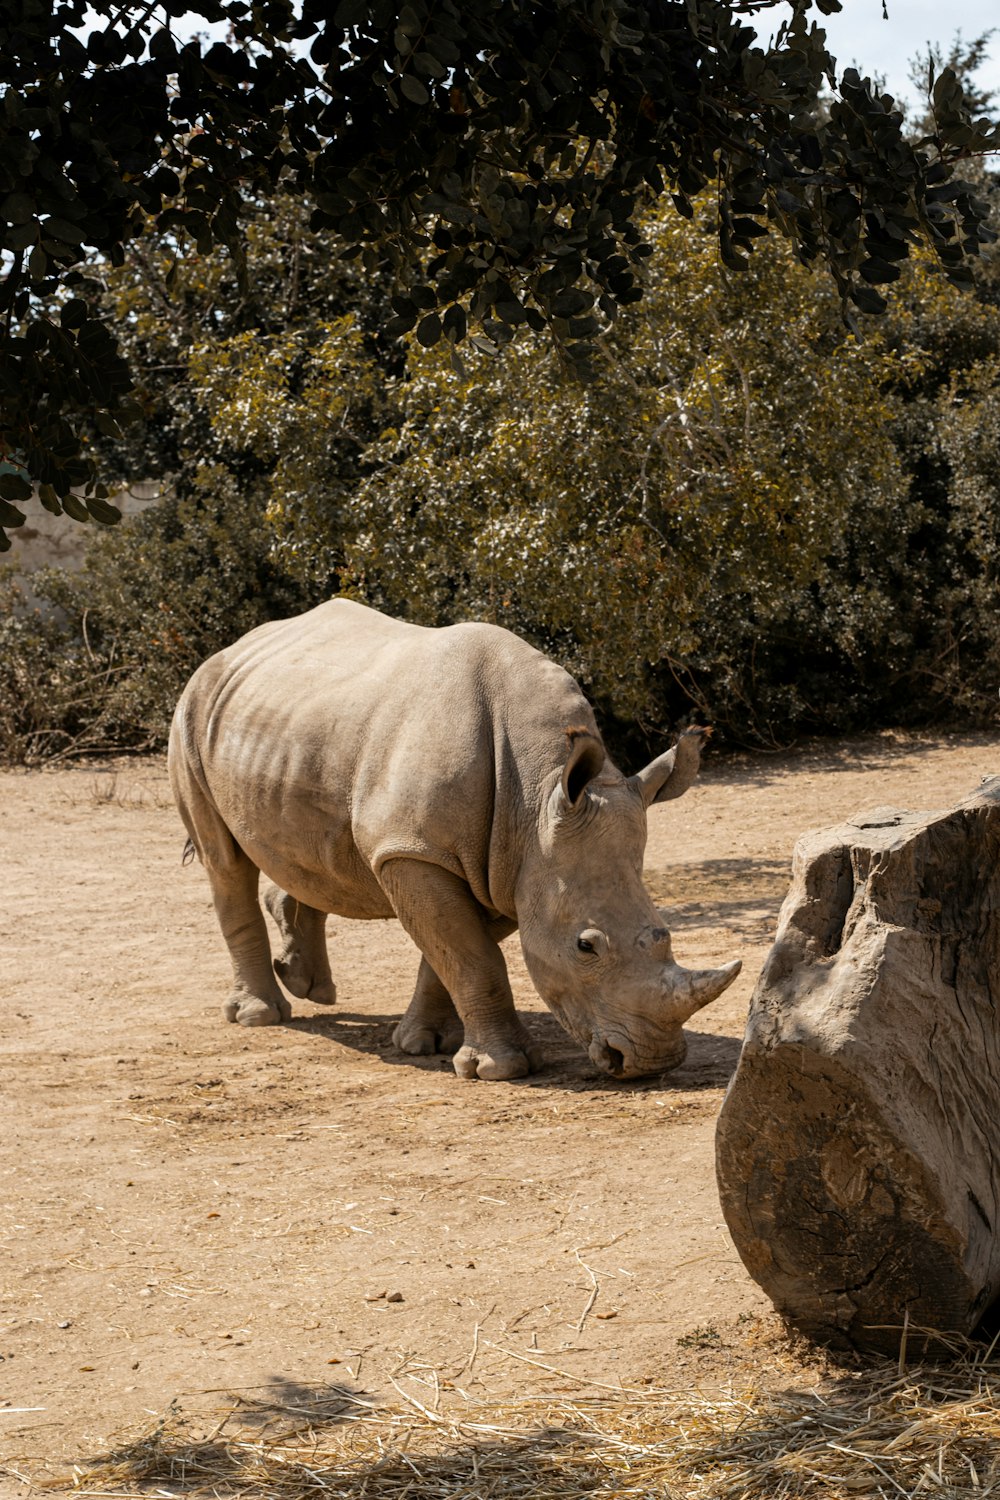 a rhino standing next to a tree stump